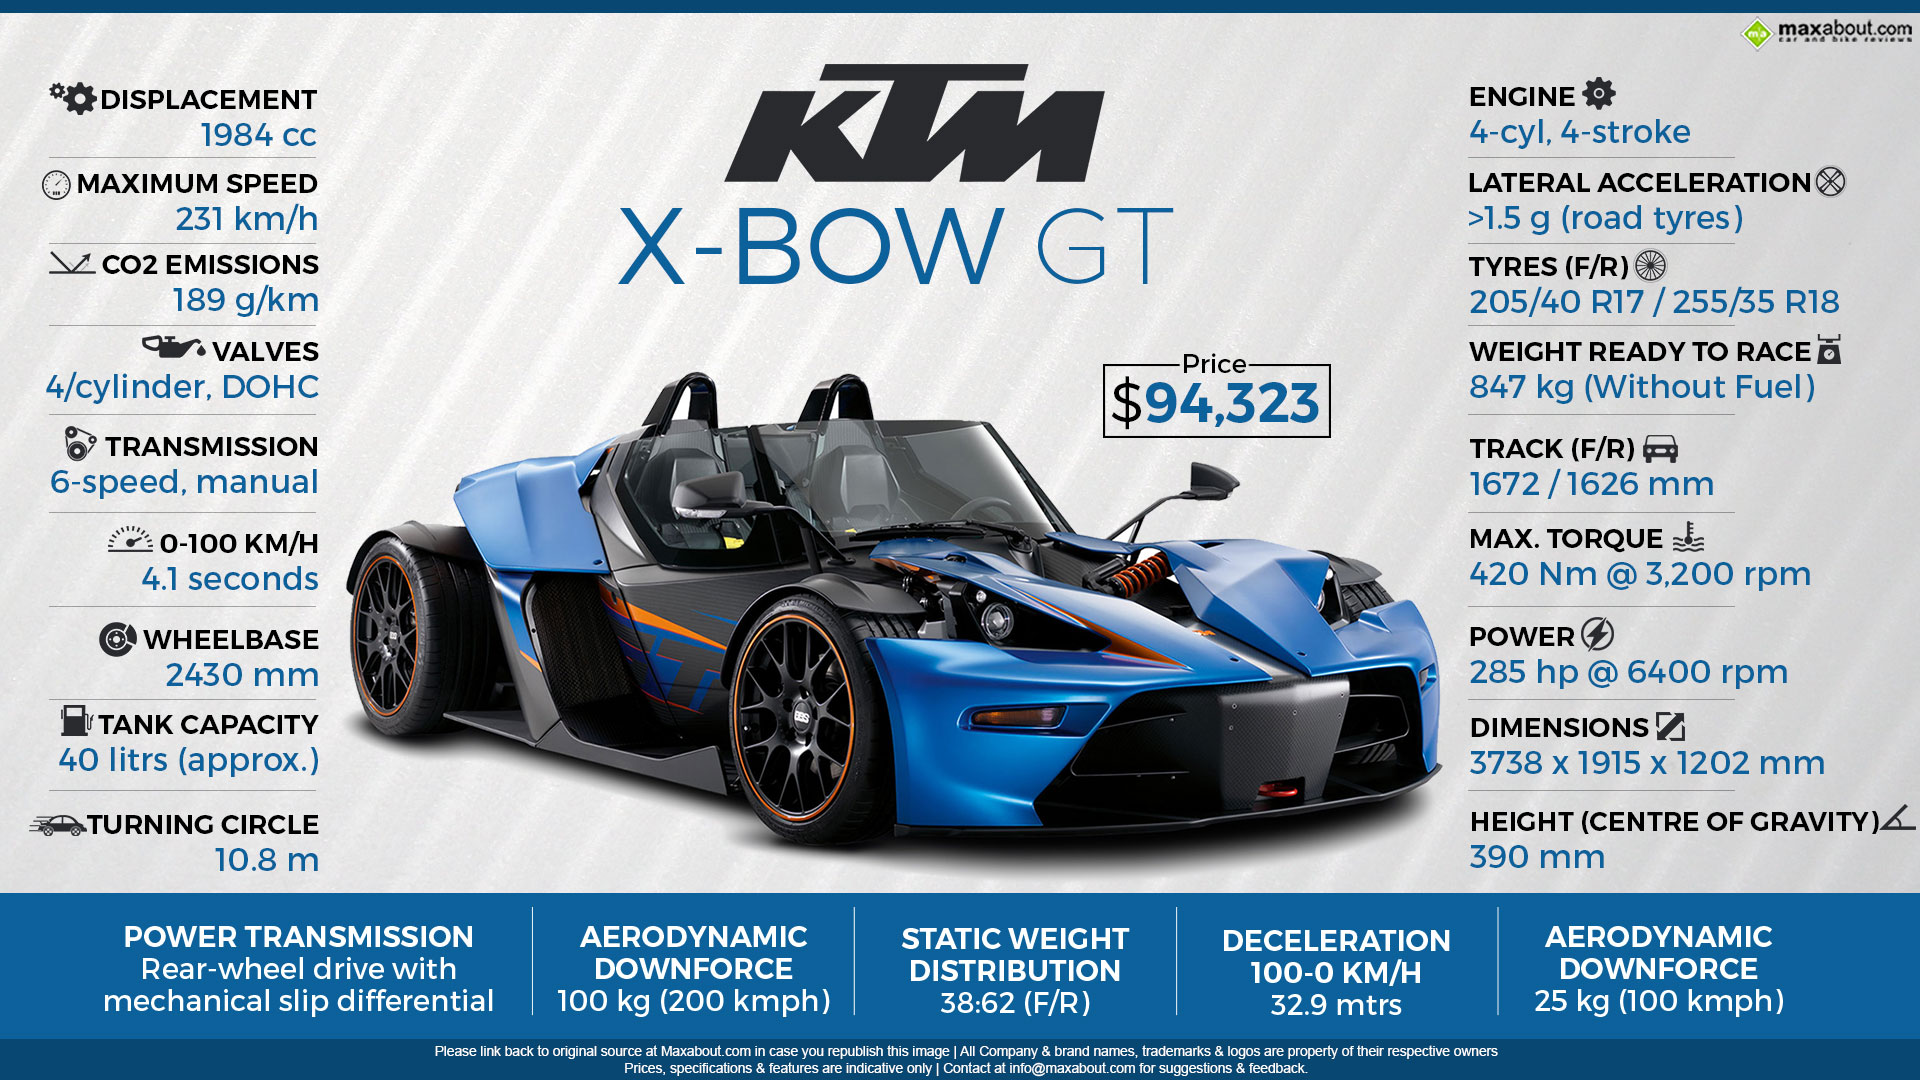 KTM X-BOW GT: Breathtaking Performance